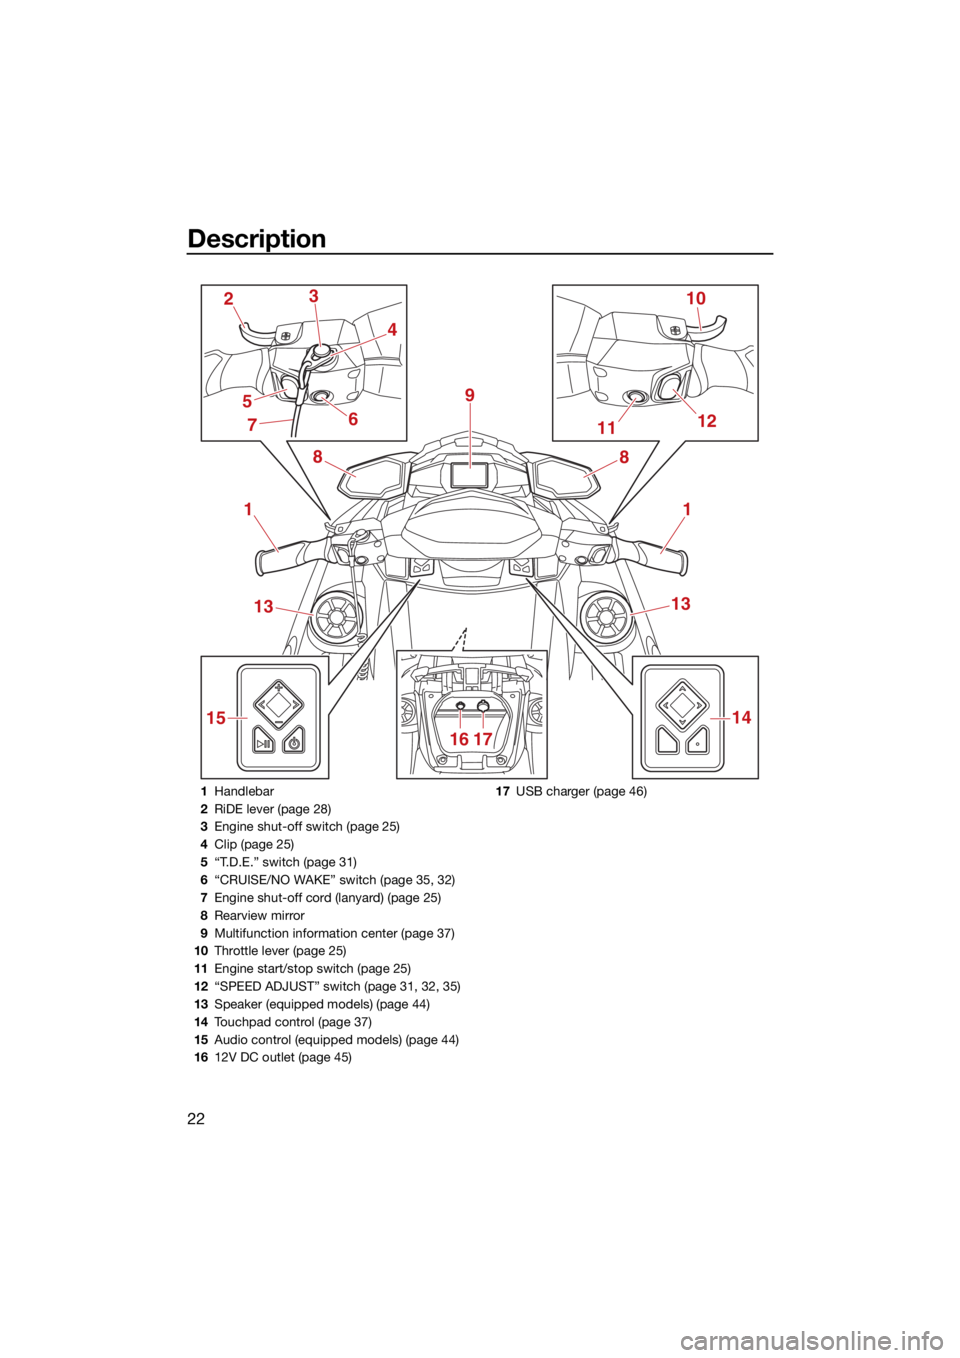 YAMAHA VX CRUISER HO 2022  Owners Manual Description
22
1
2
1112
15 10
3
6 8
9
4
51
13
14
16 17 13
8
7
1
Handlebar
2 RiDE lever (page 28)
3 Engine shut-off switch (page 25)
4 Clip (page 25)
5 “T.D.E.” switch (page 31)
6 “CRUISE/NO WAKE